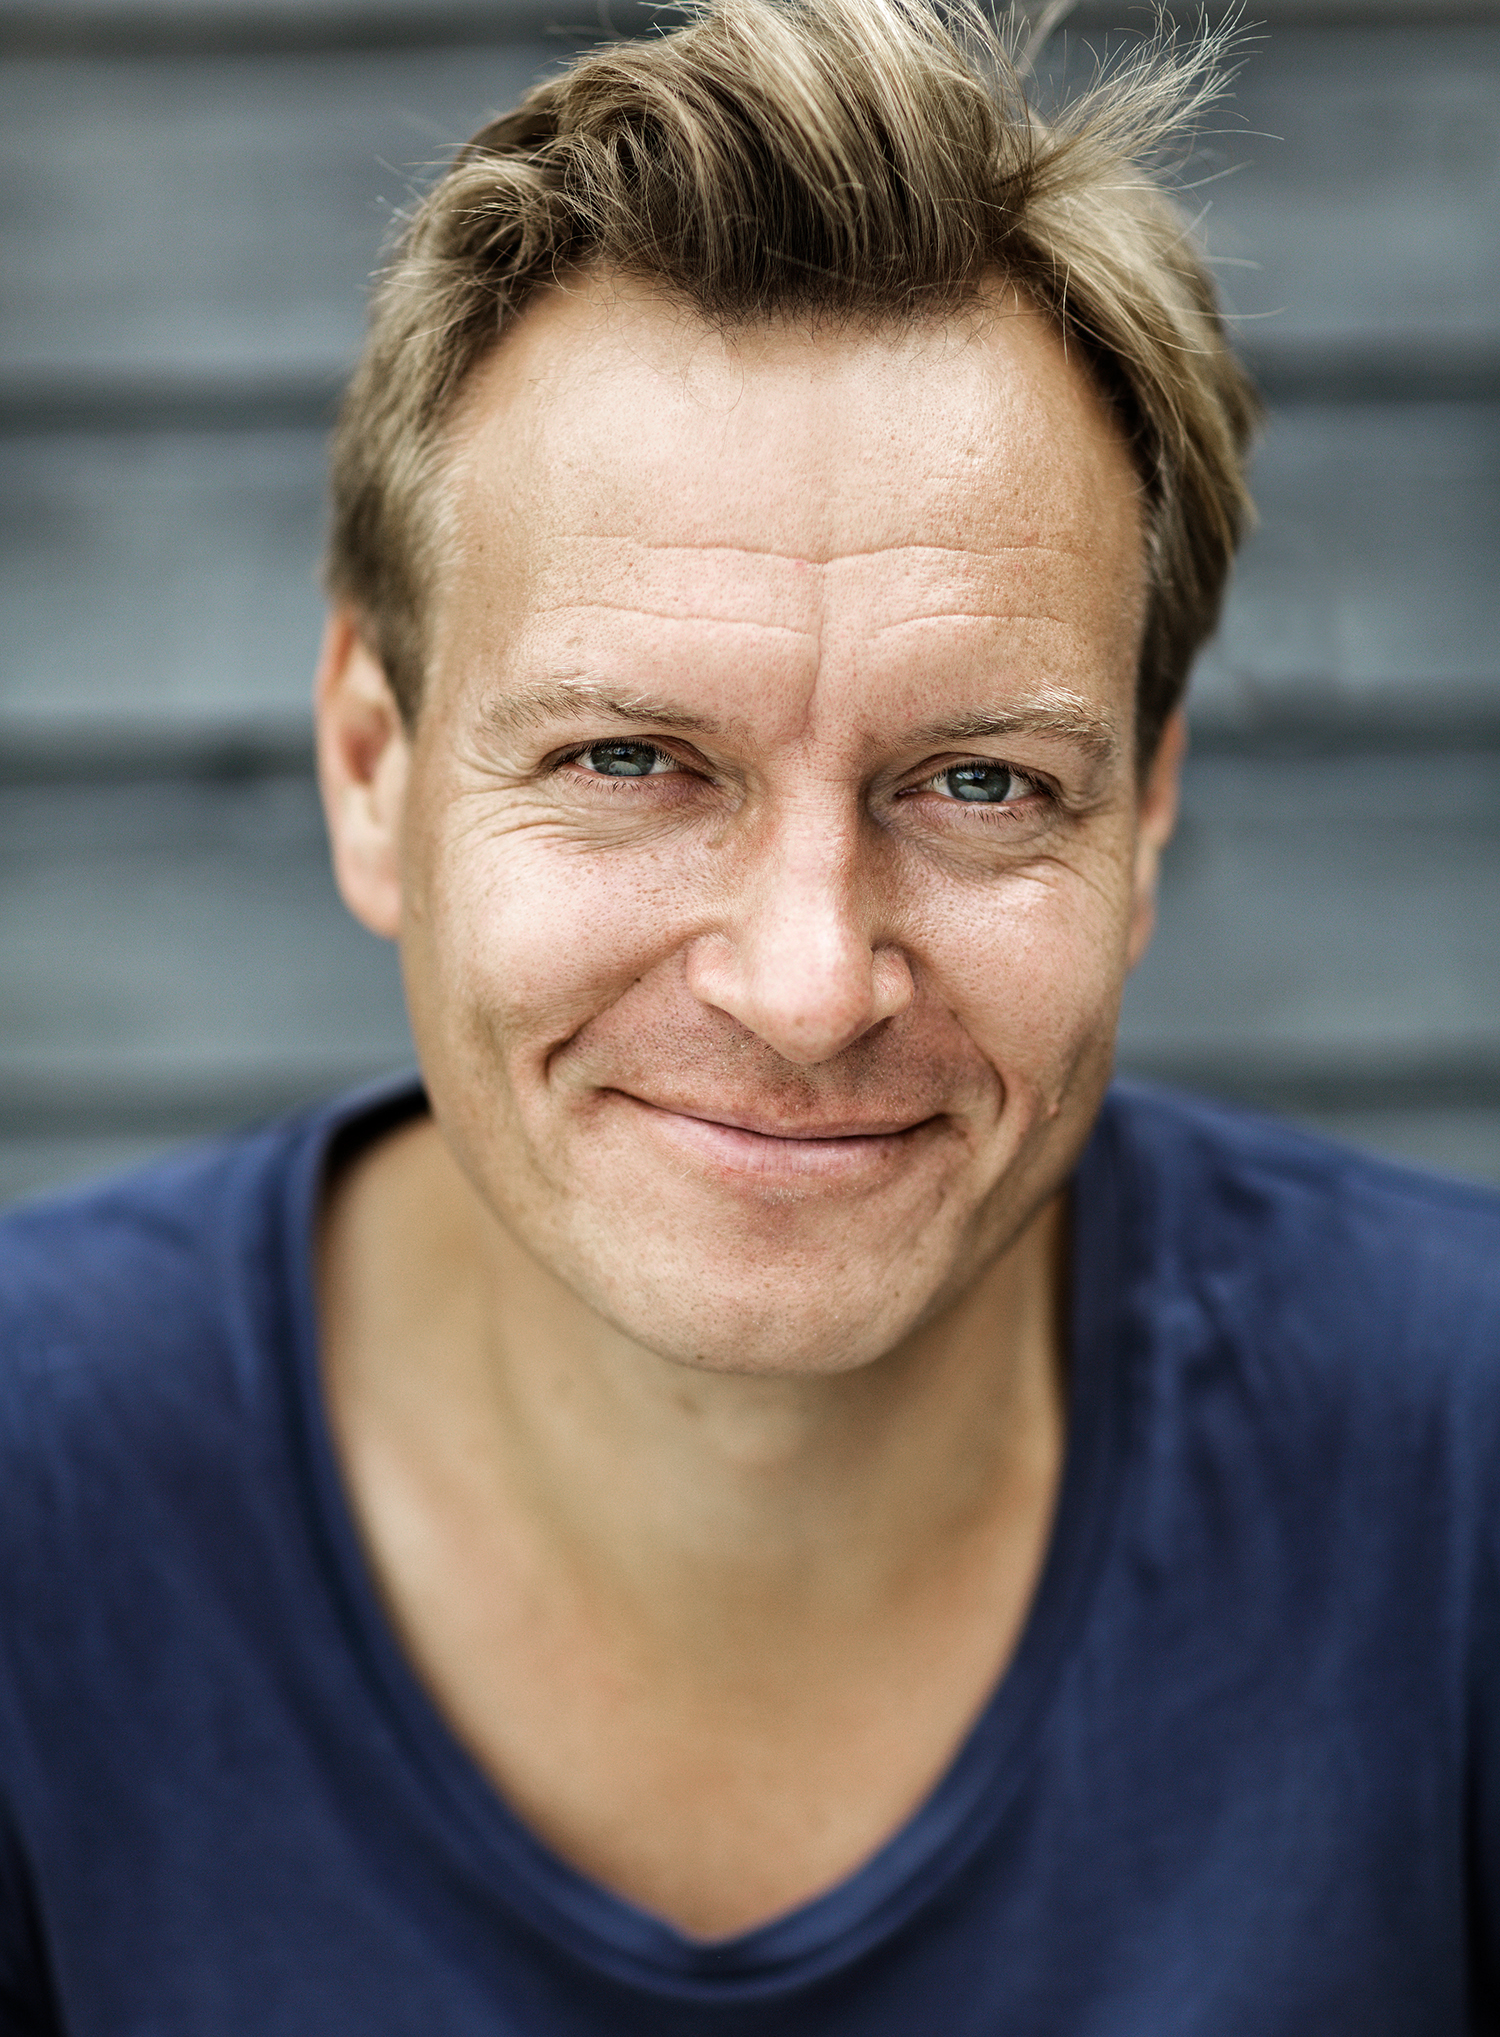 Rasmus Tantholdt